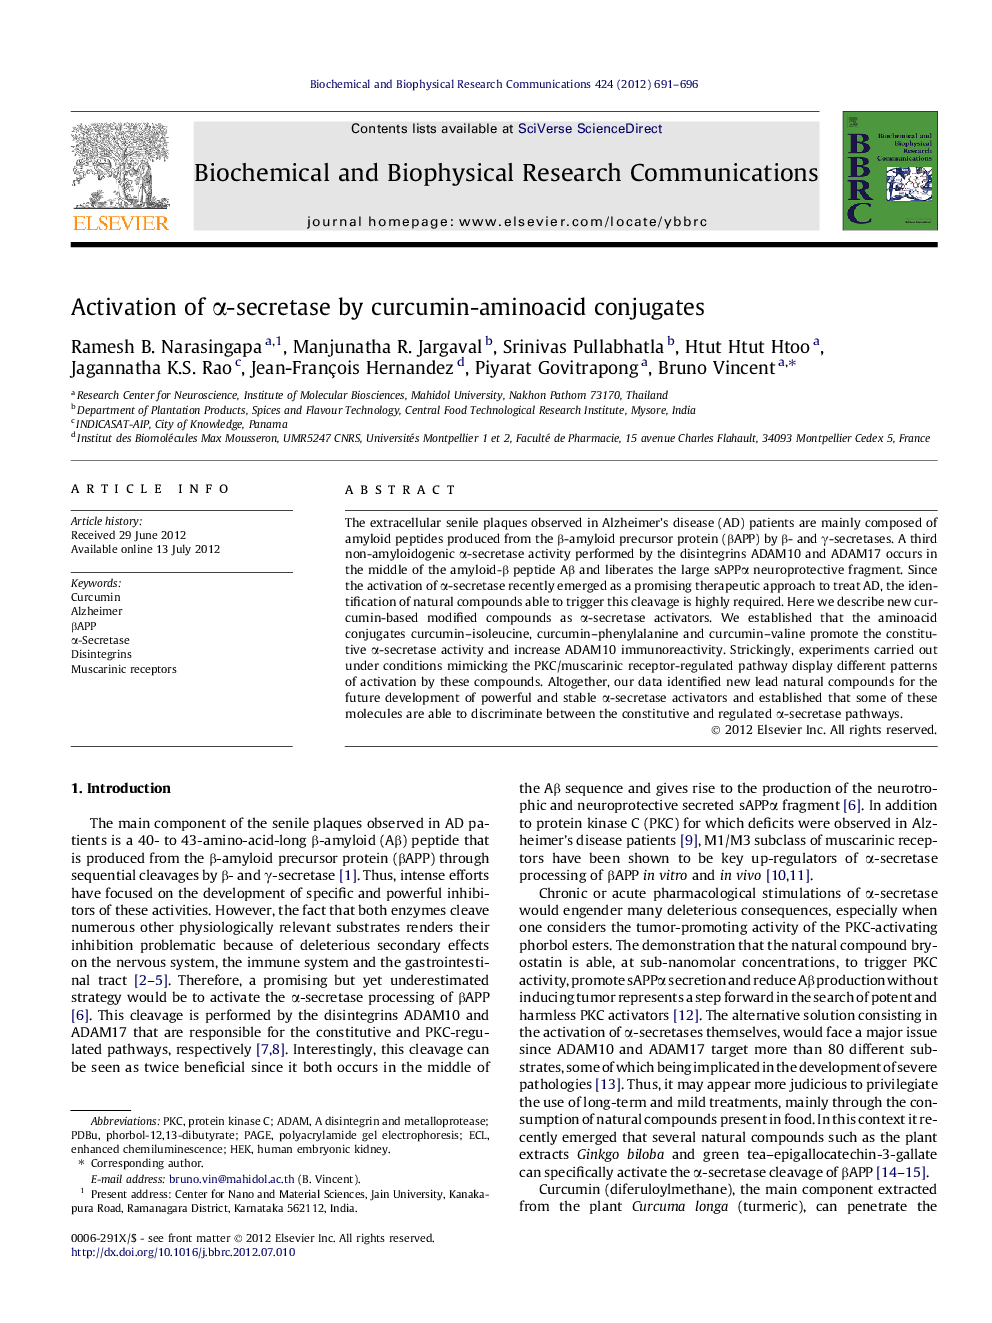 Activation of α-secretase by curcumin-aminoacid conjugates